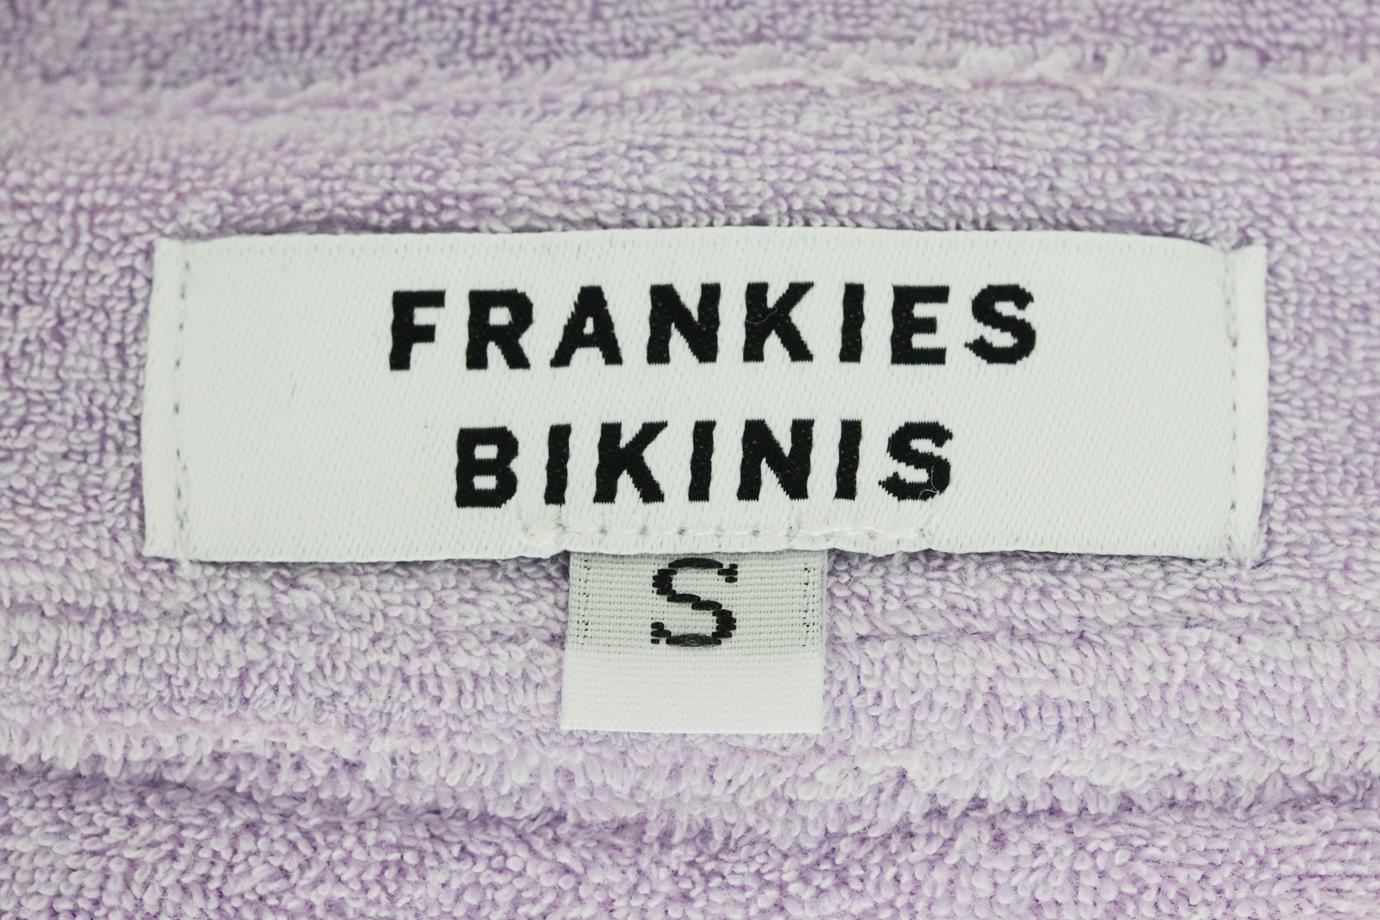 FRANKIES BIKINIS COTTON TERRY SHIRT SMALL